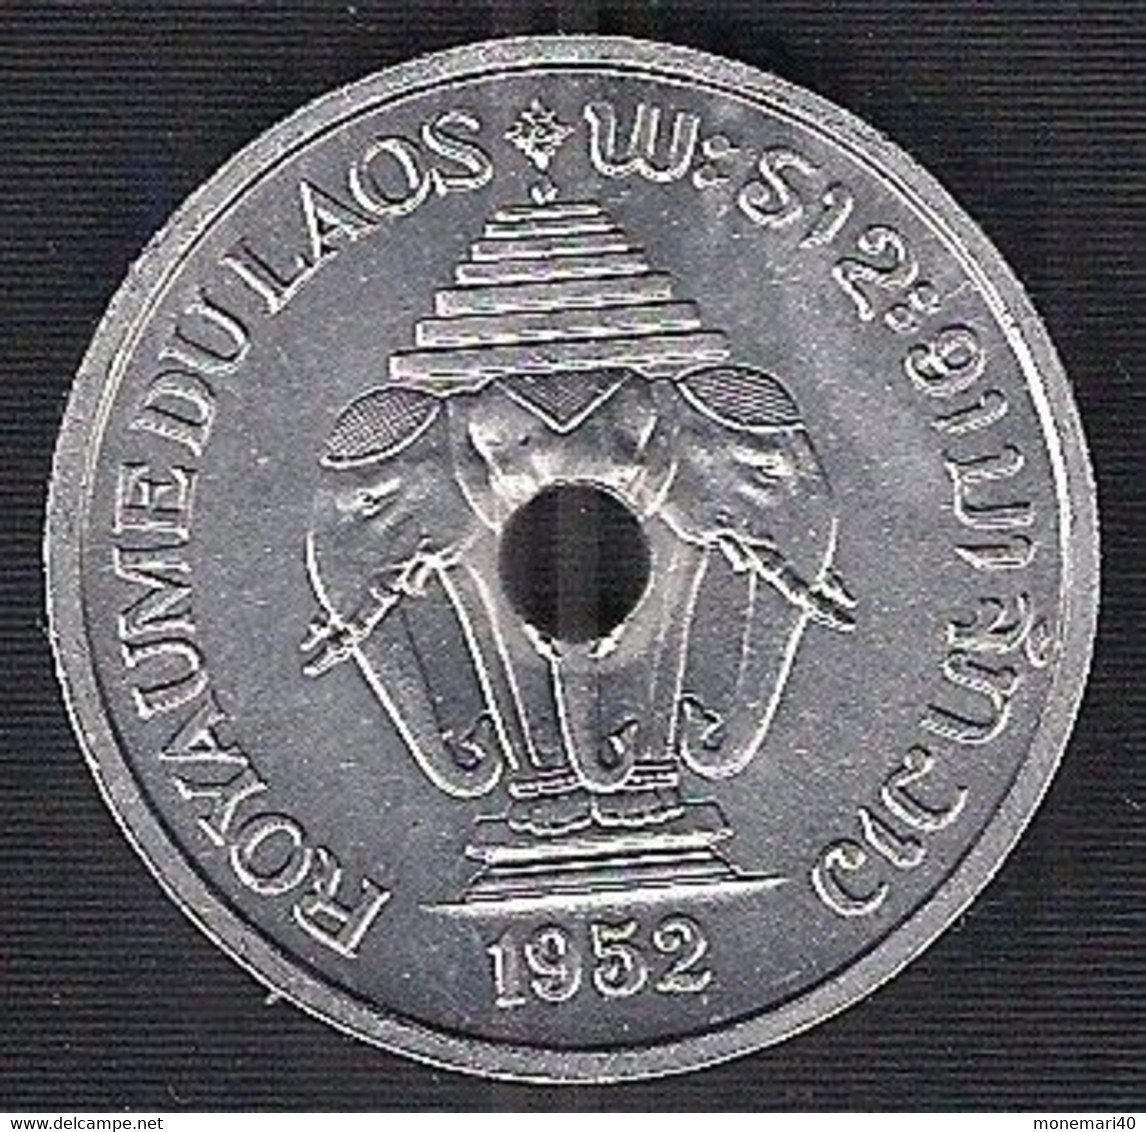 LAOS 20 CENTS -1952 - Laos